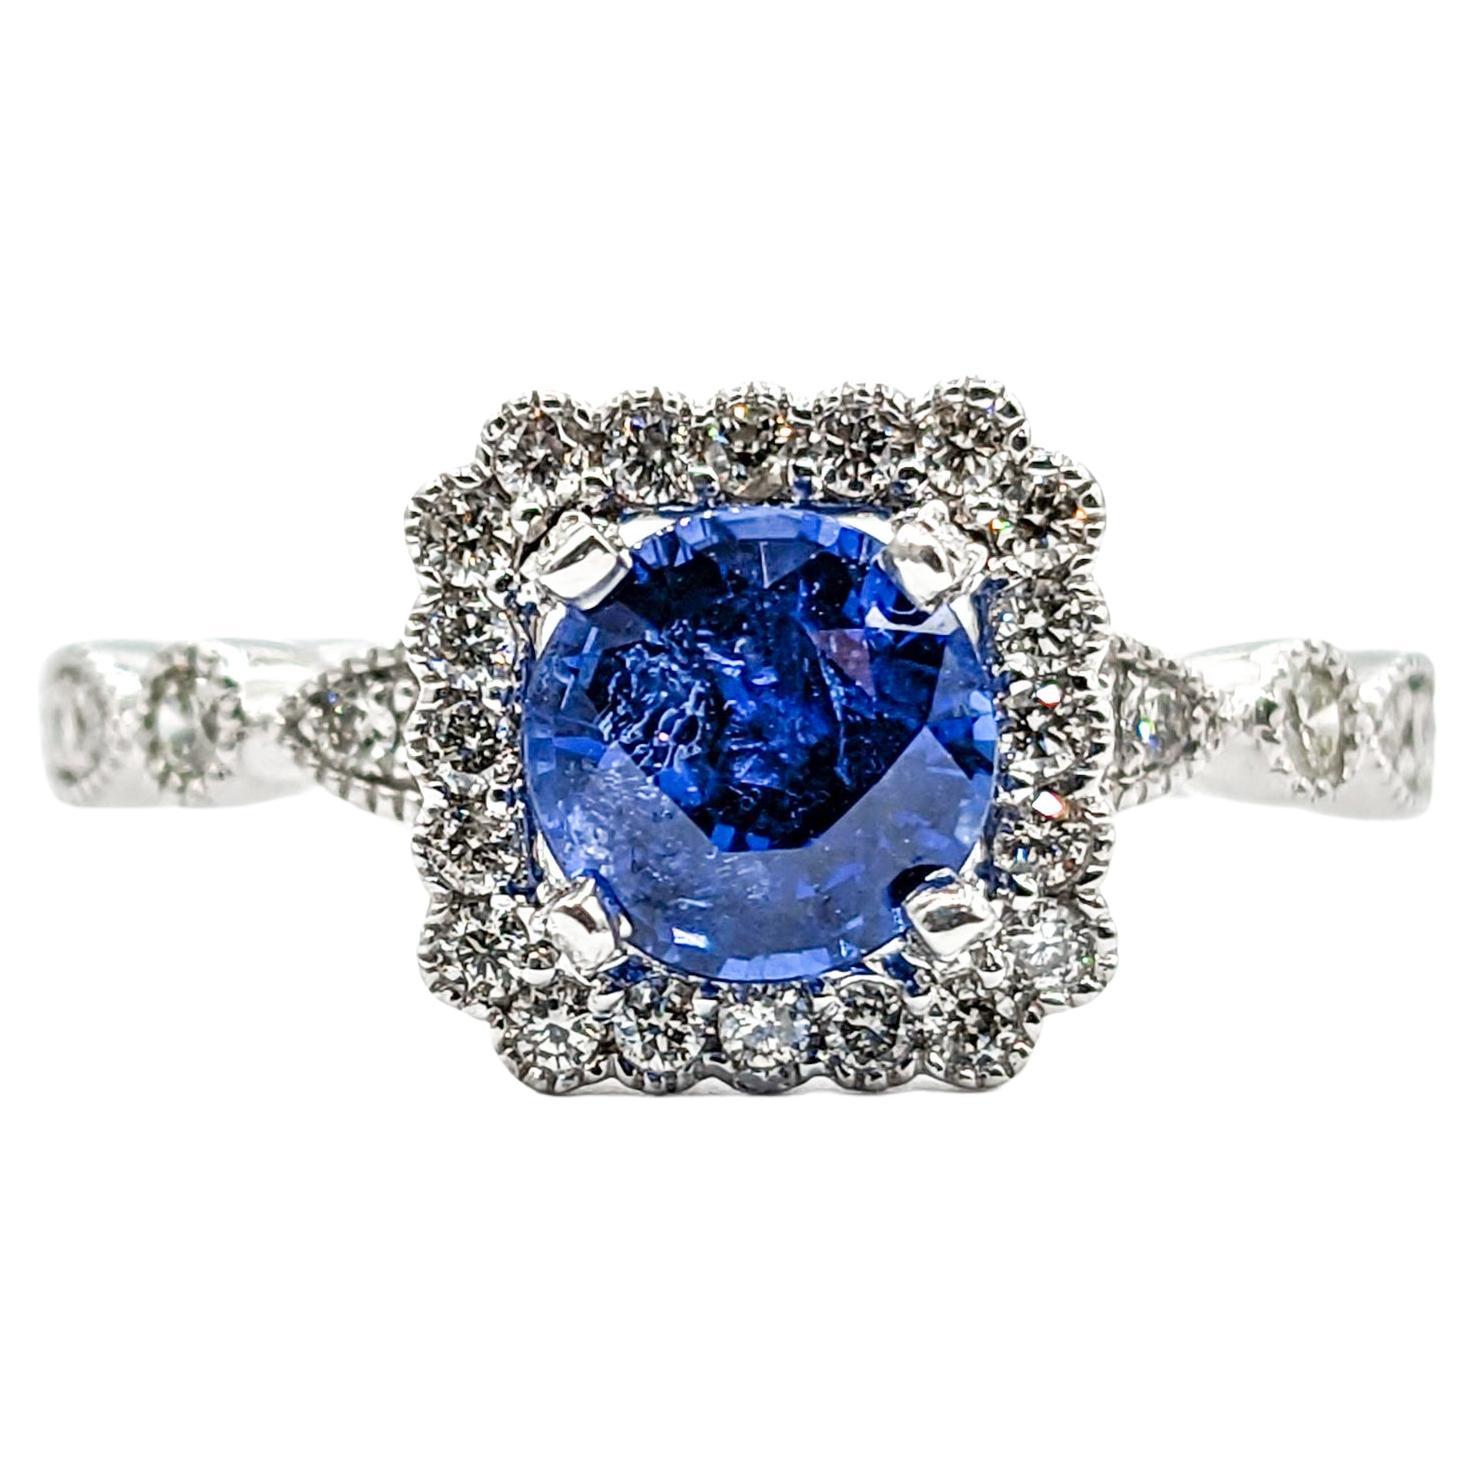 Vibrant Blue Sapphire & Diamond Engagement Ring in Platinum